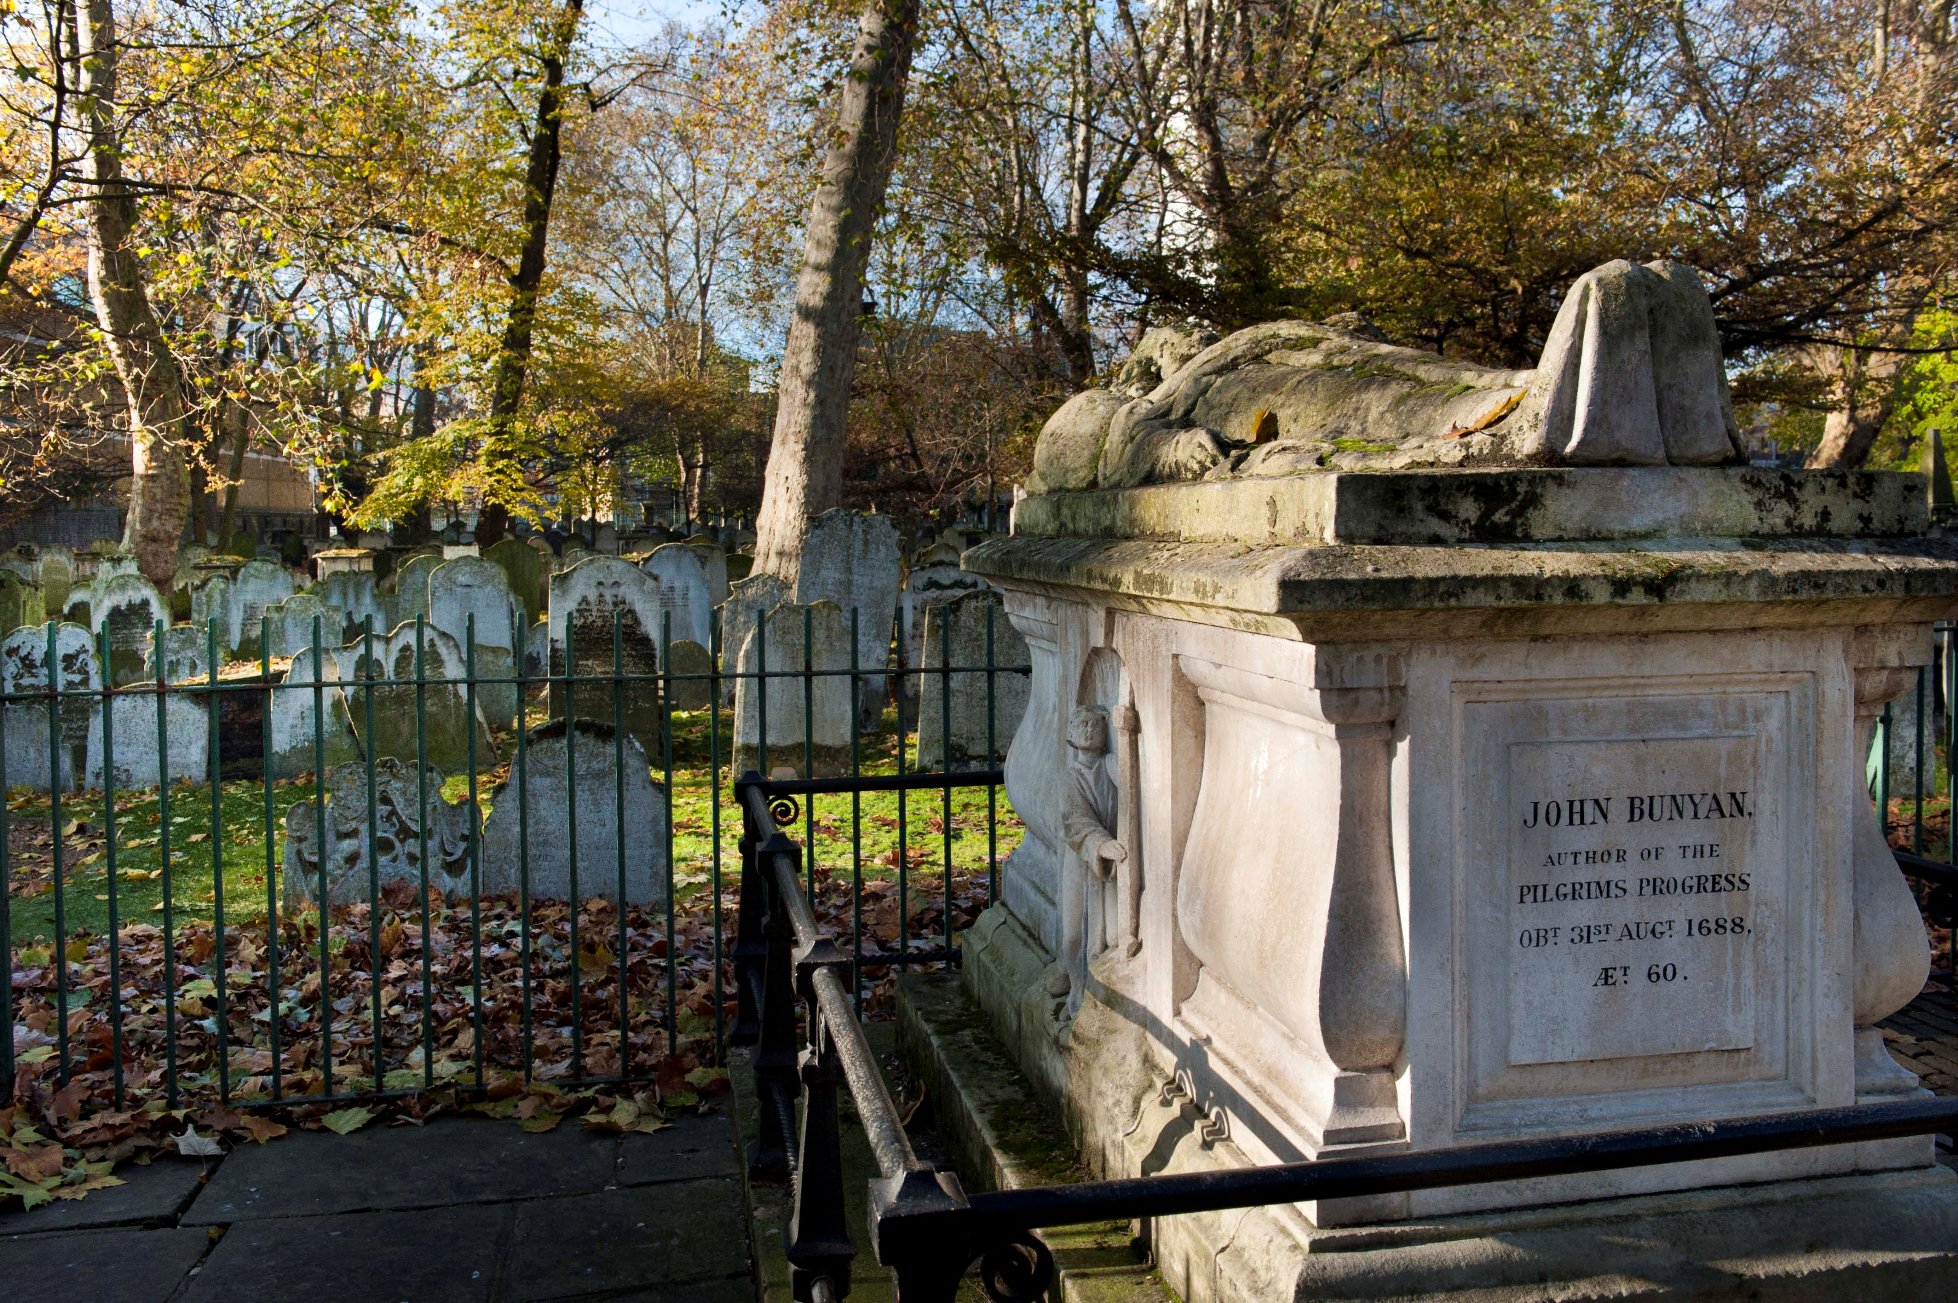 Bunhill Fields Burial Ground, City Road, Islington, London. Exterior showing John Bunyan’s stone-built tomb and gravestones.